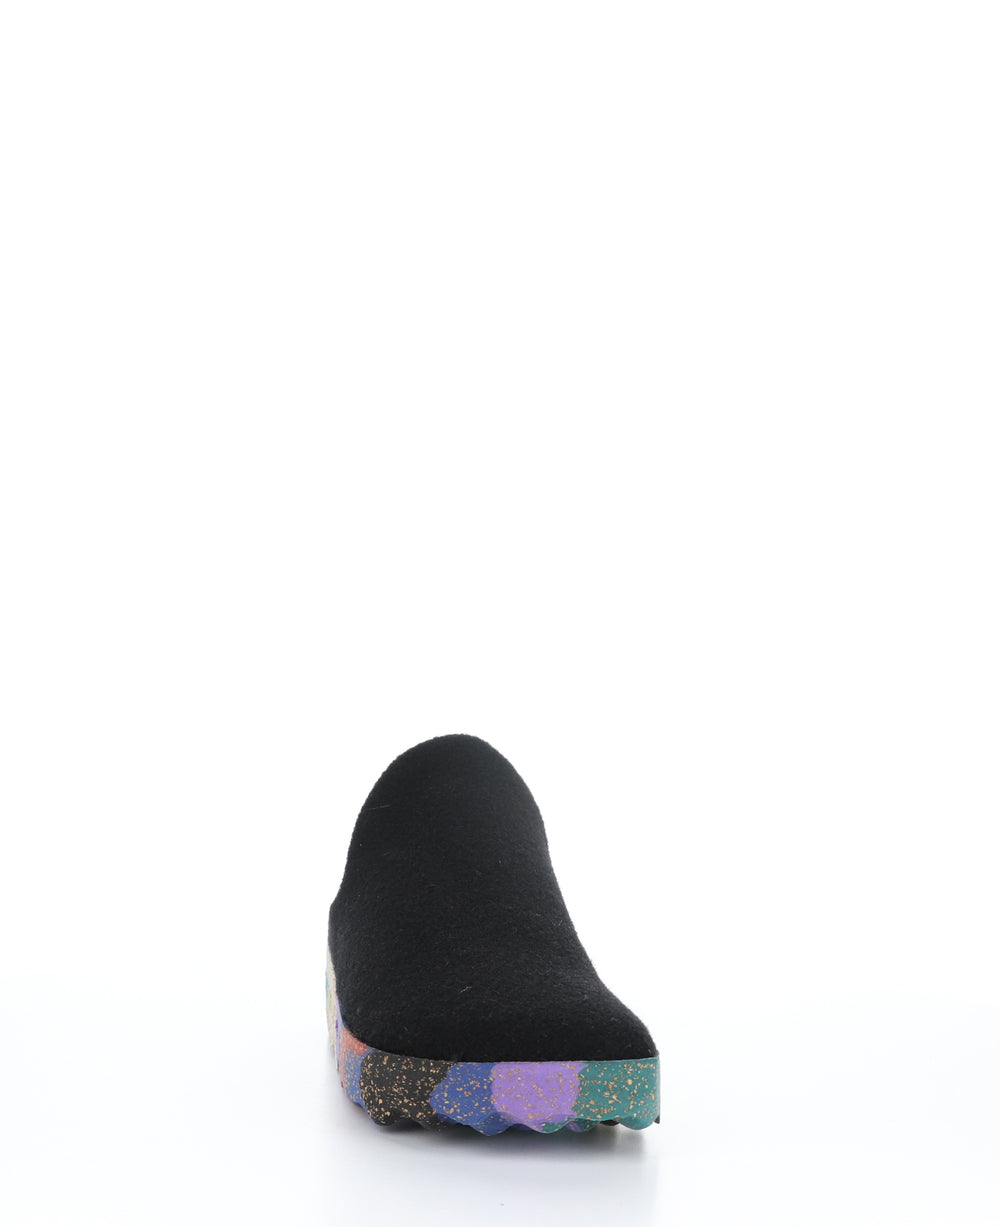 COME023ASP Black/Multi Round Toe Shoes|COME023ASP Chaussures à Bout Rond in Noir